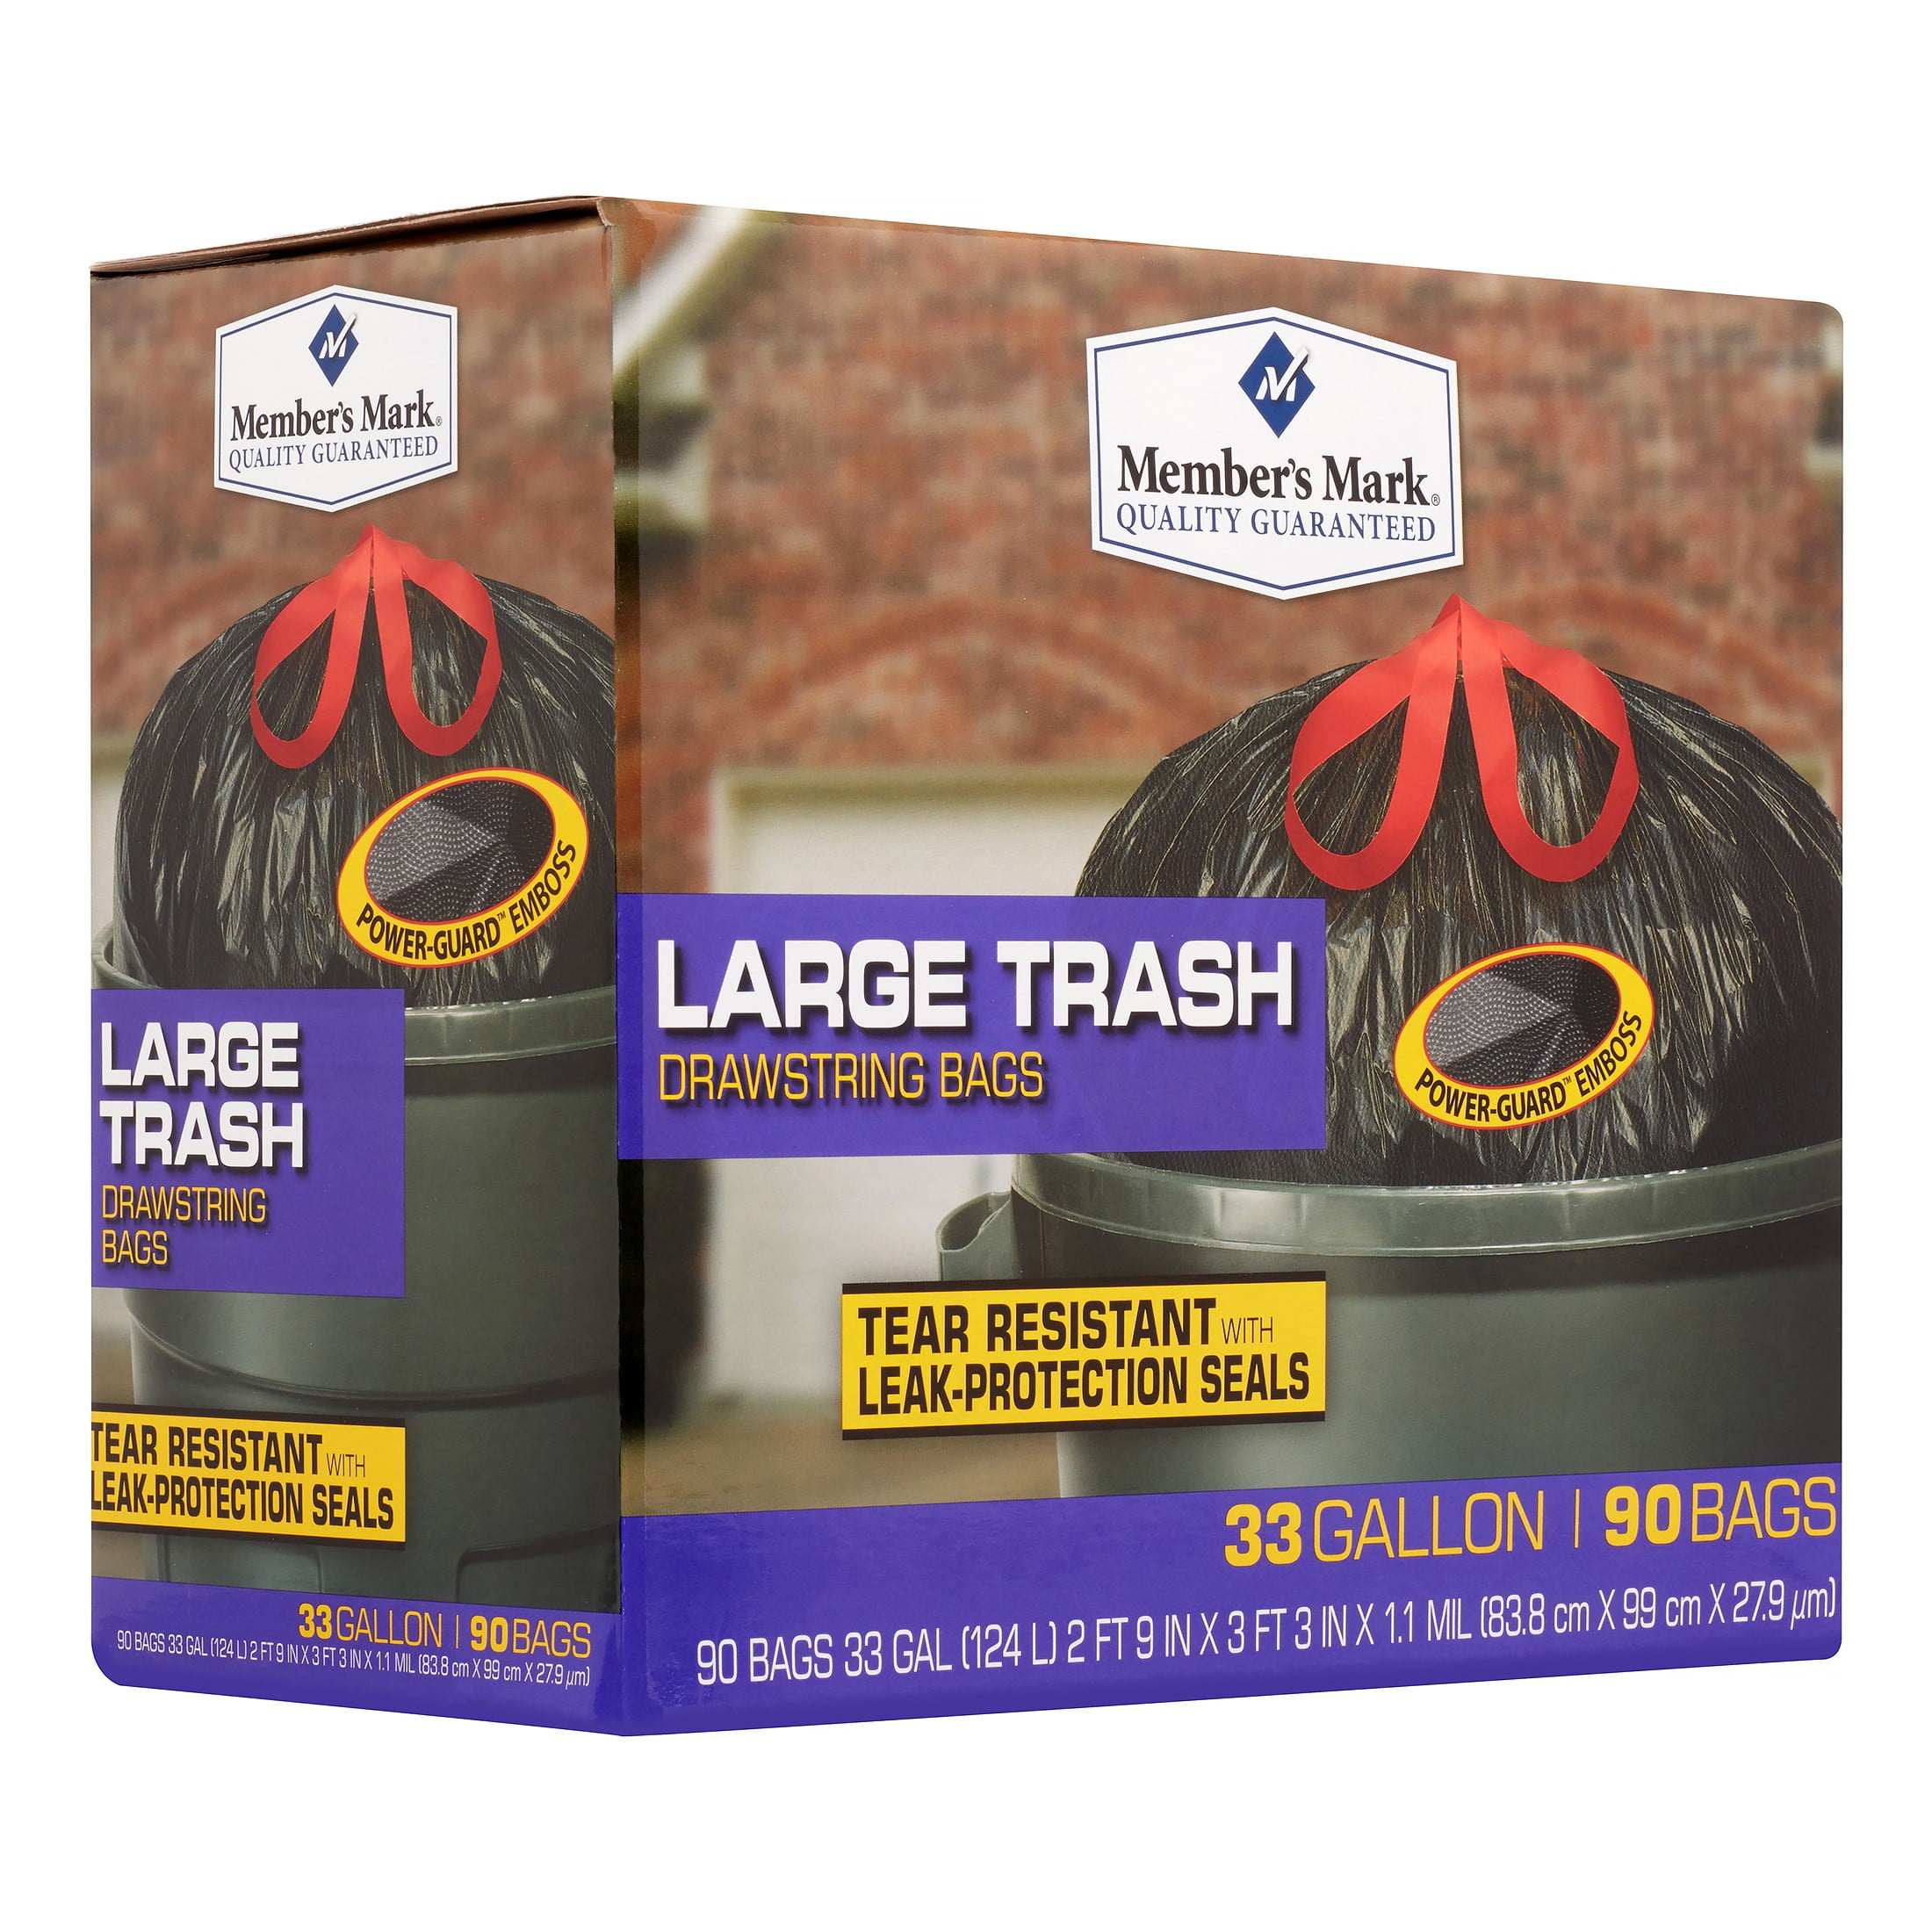 Member's Mark 33-Gallon Power-Guard Drawstring Trash Bags (90